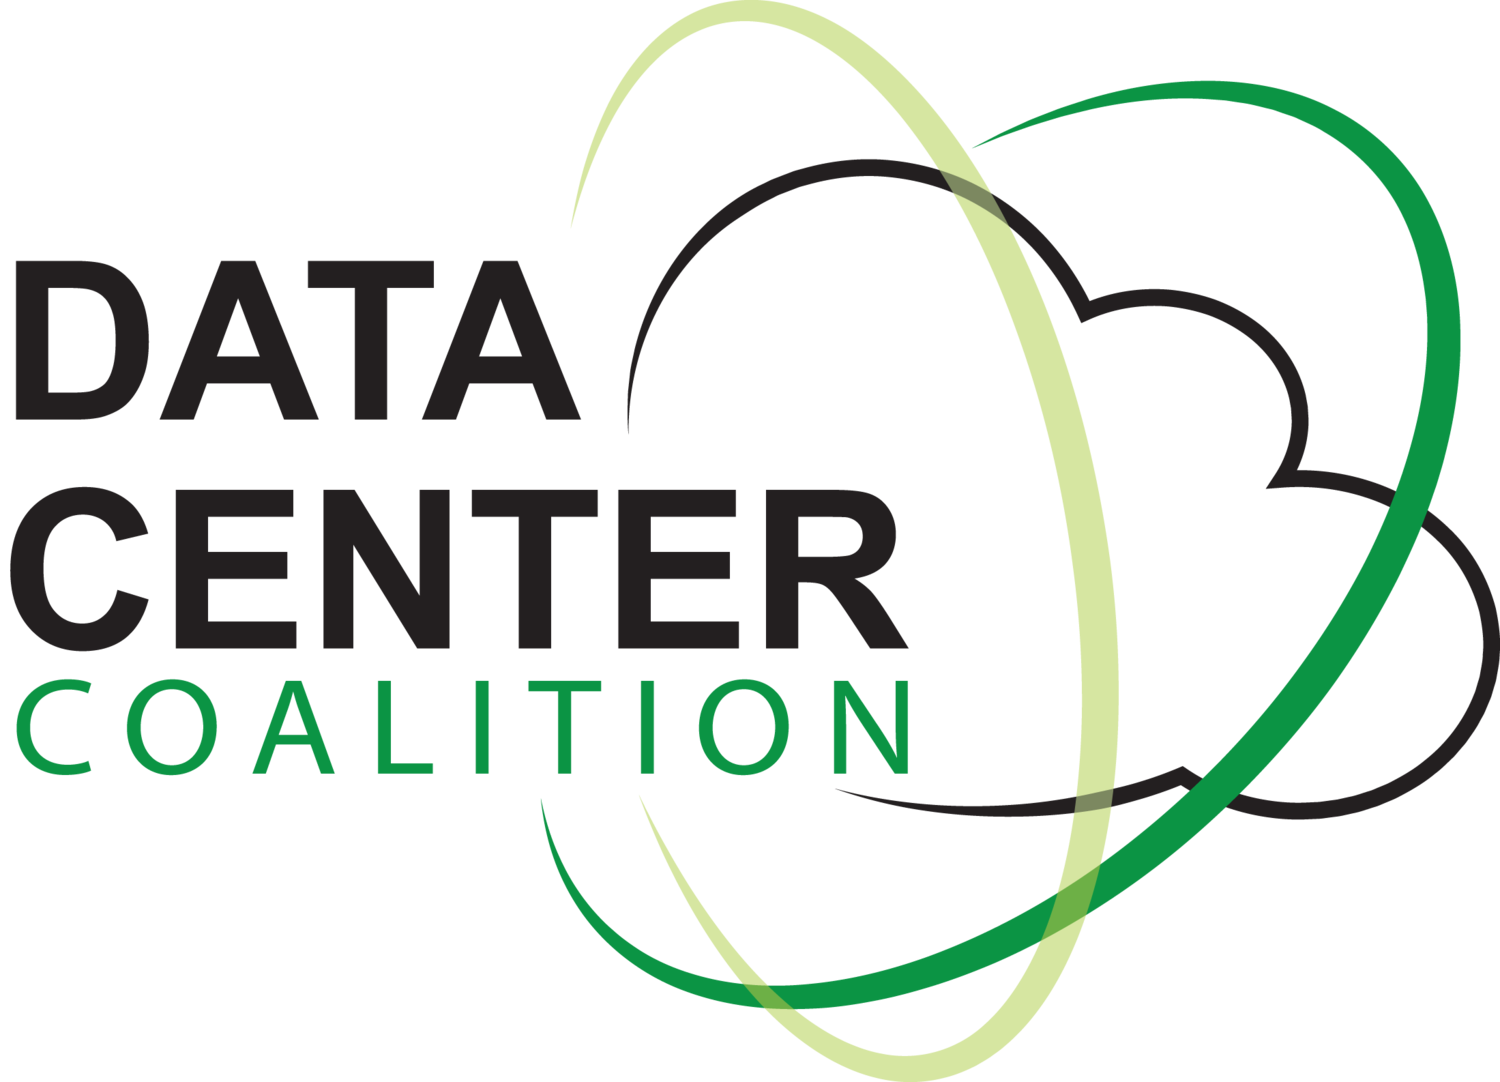 Data Center Coalition